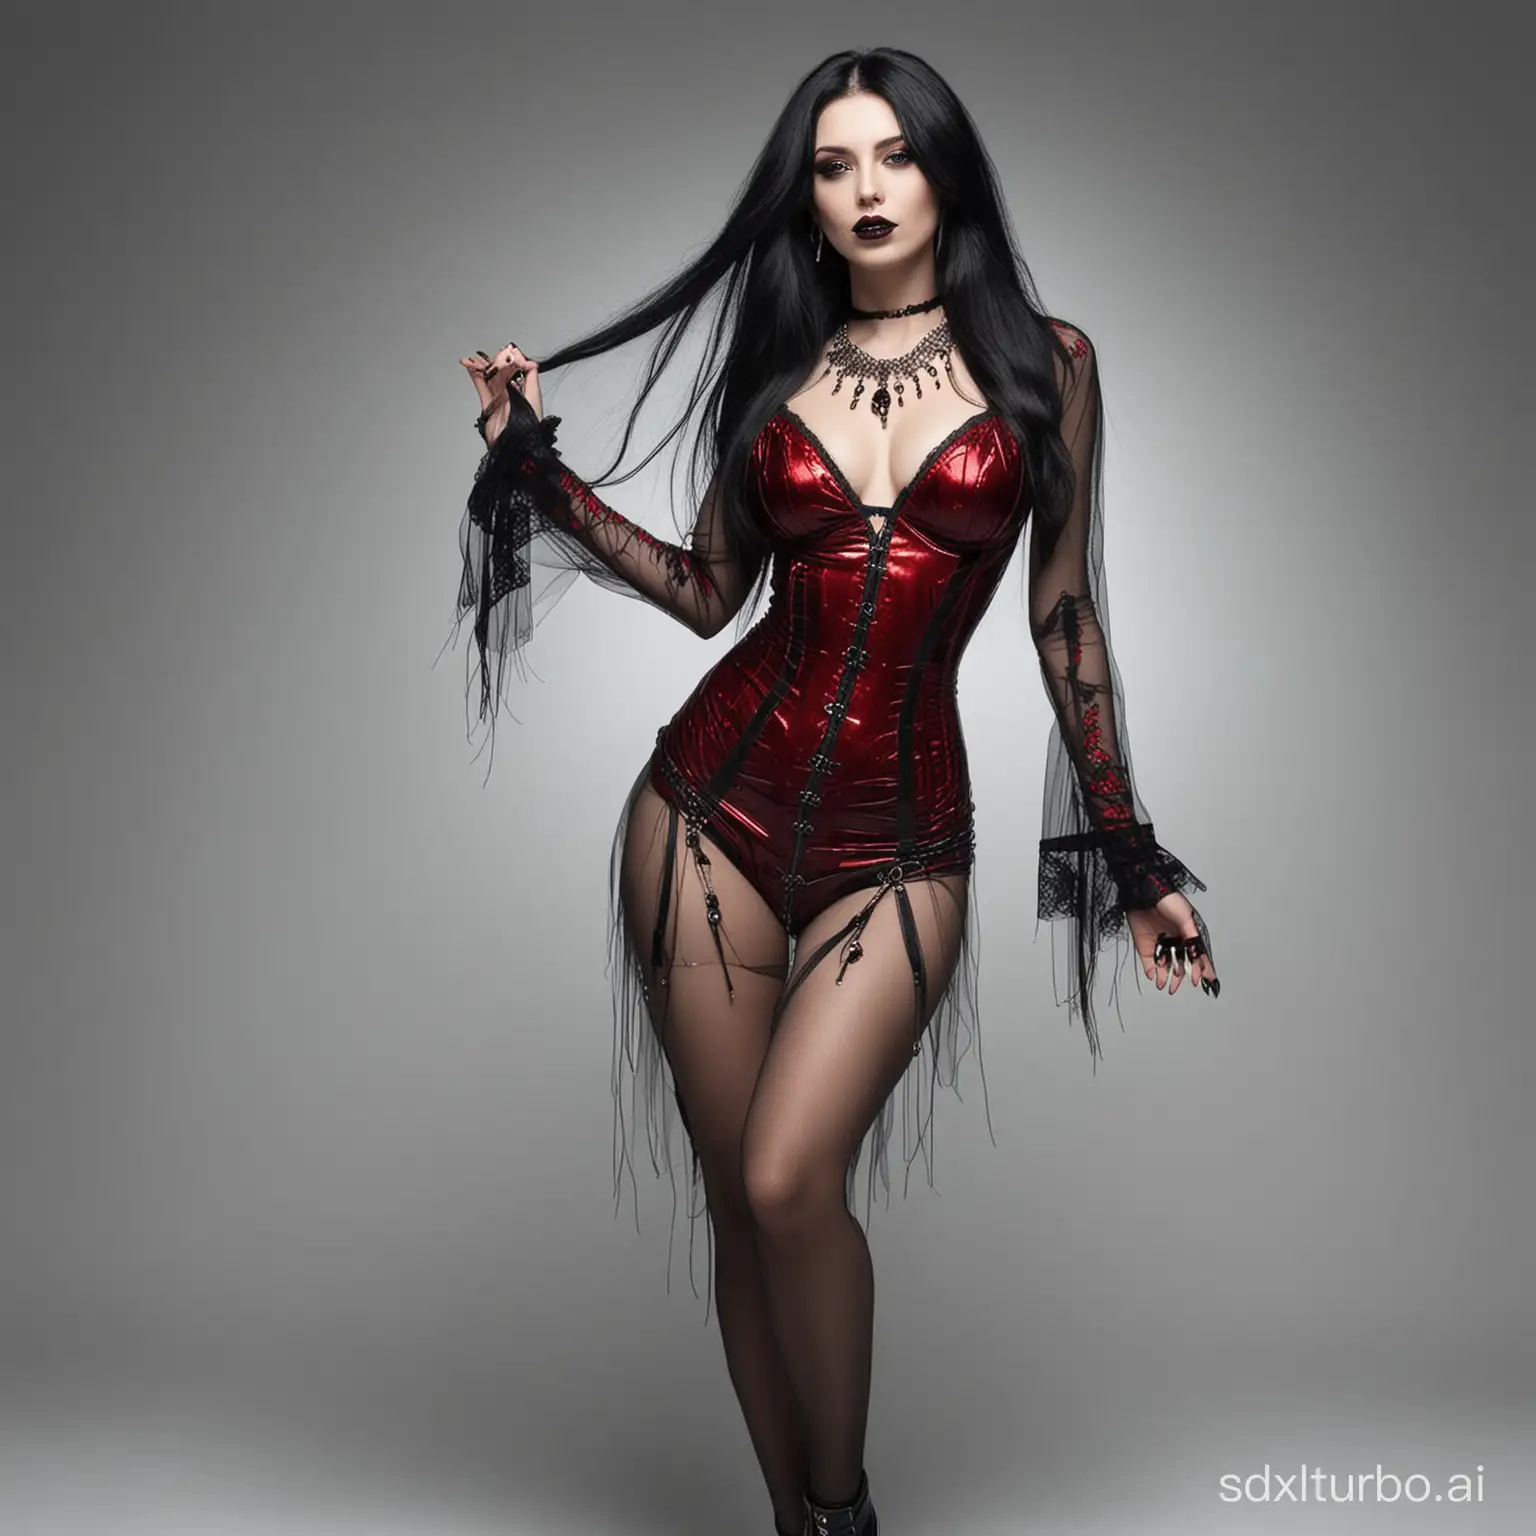 Sexy goth woman
full body picture transparent dark red longerine, Silver jewelry, black lipstick, long black hair
